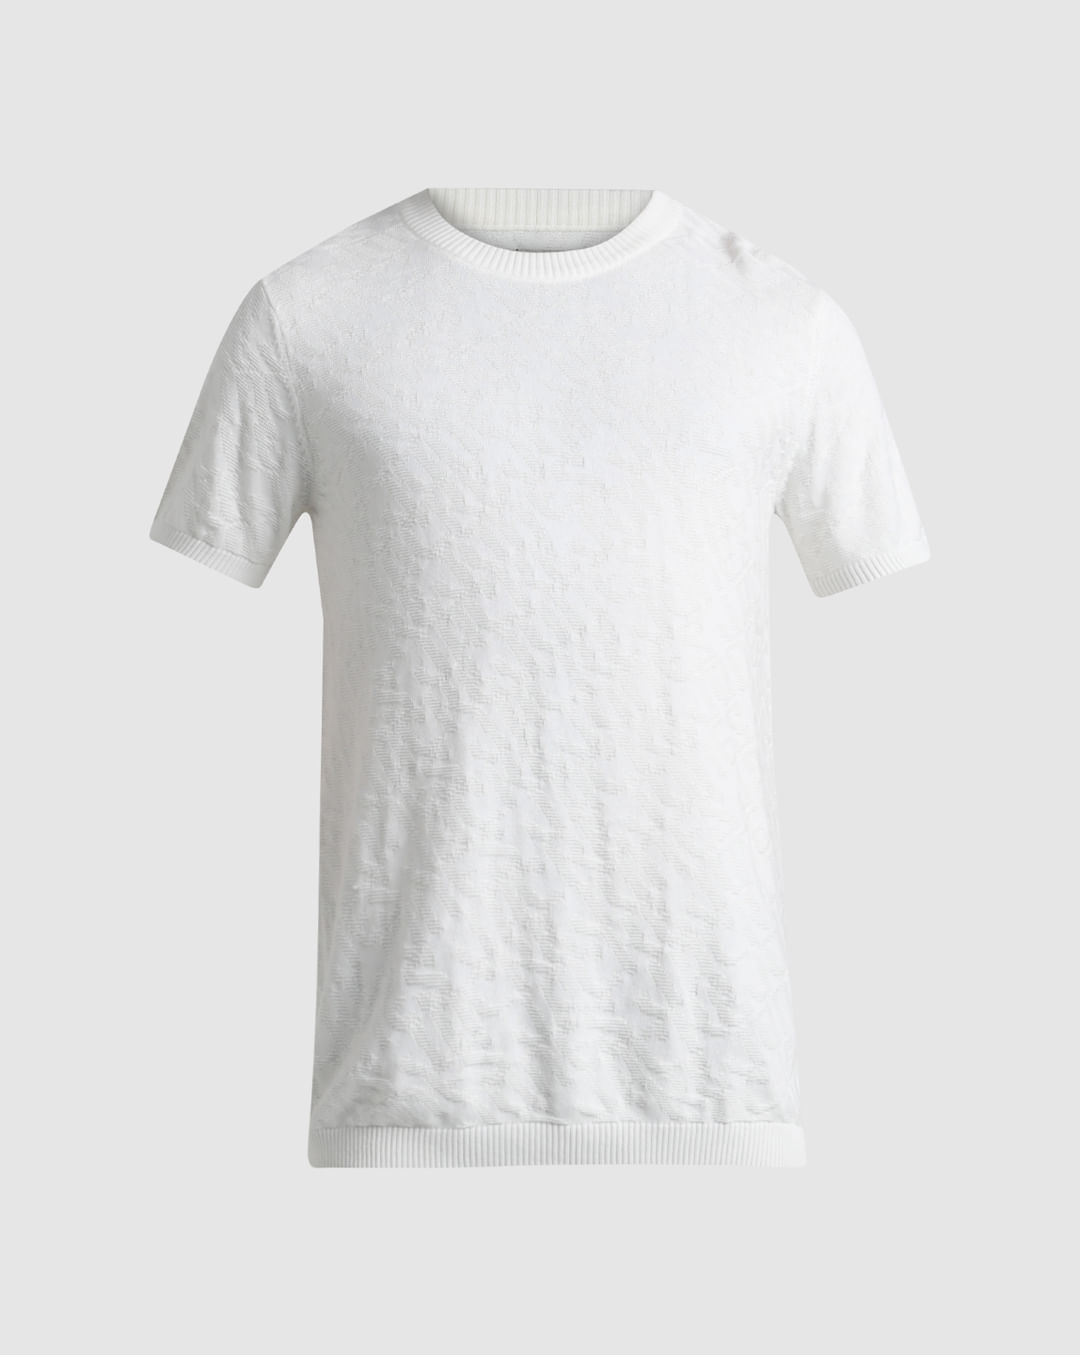 Circular Knit T-Shirt - White  Knitted tshirt, Shirts white, T shirt